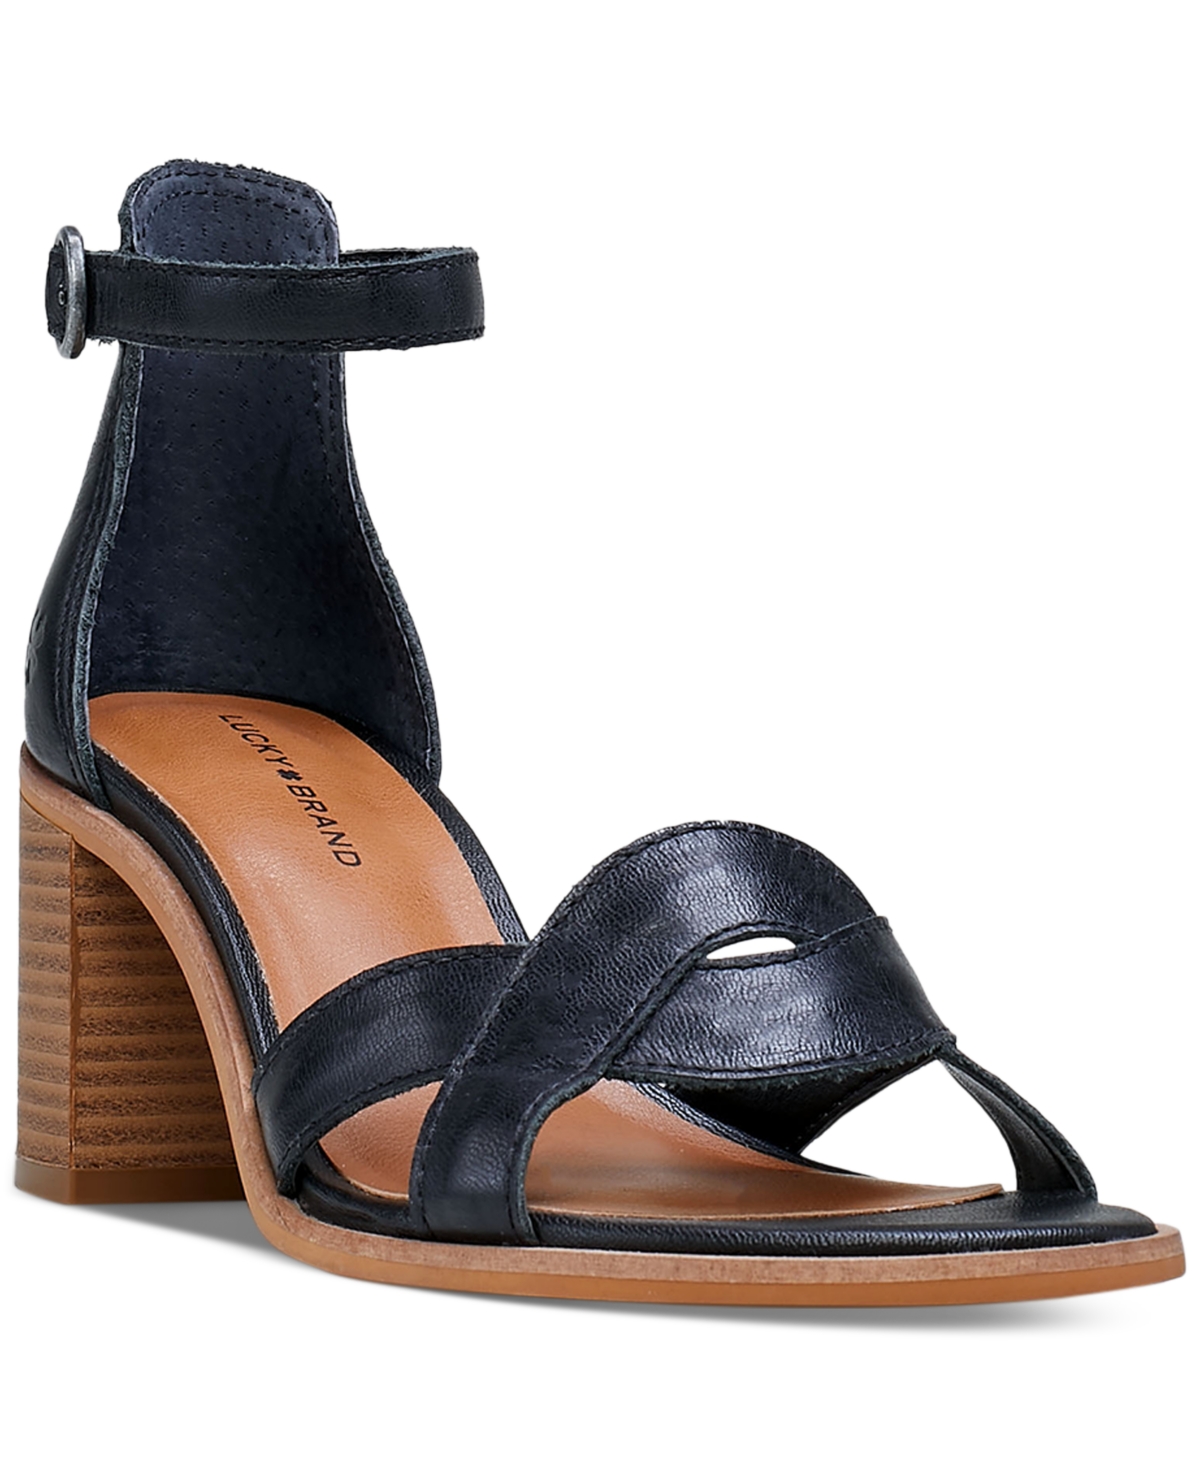 Women's Sarwa Ankle Strap Dress Sandals - Black Leather